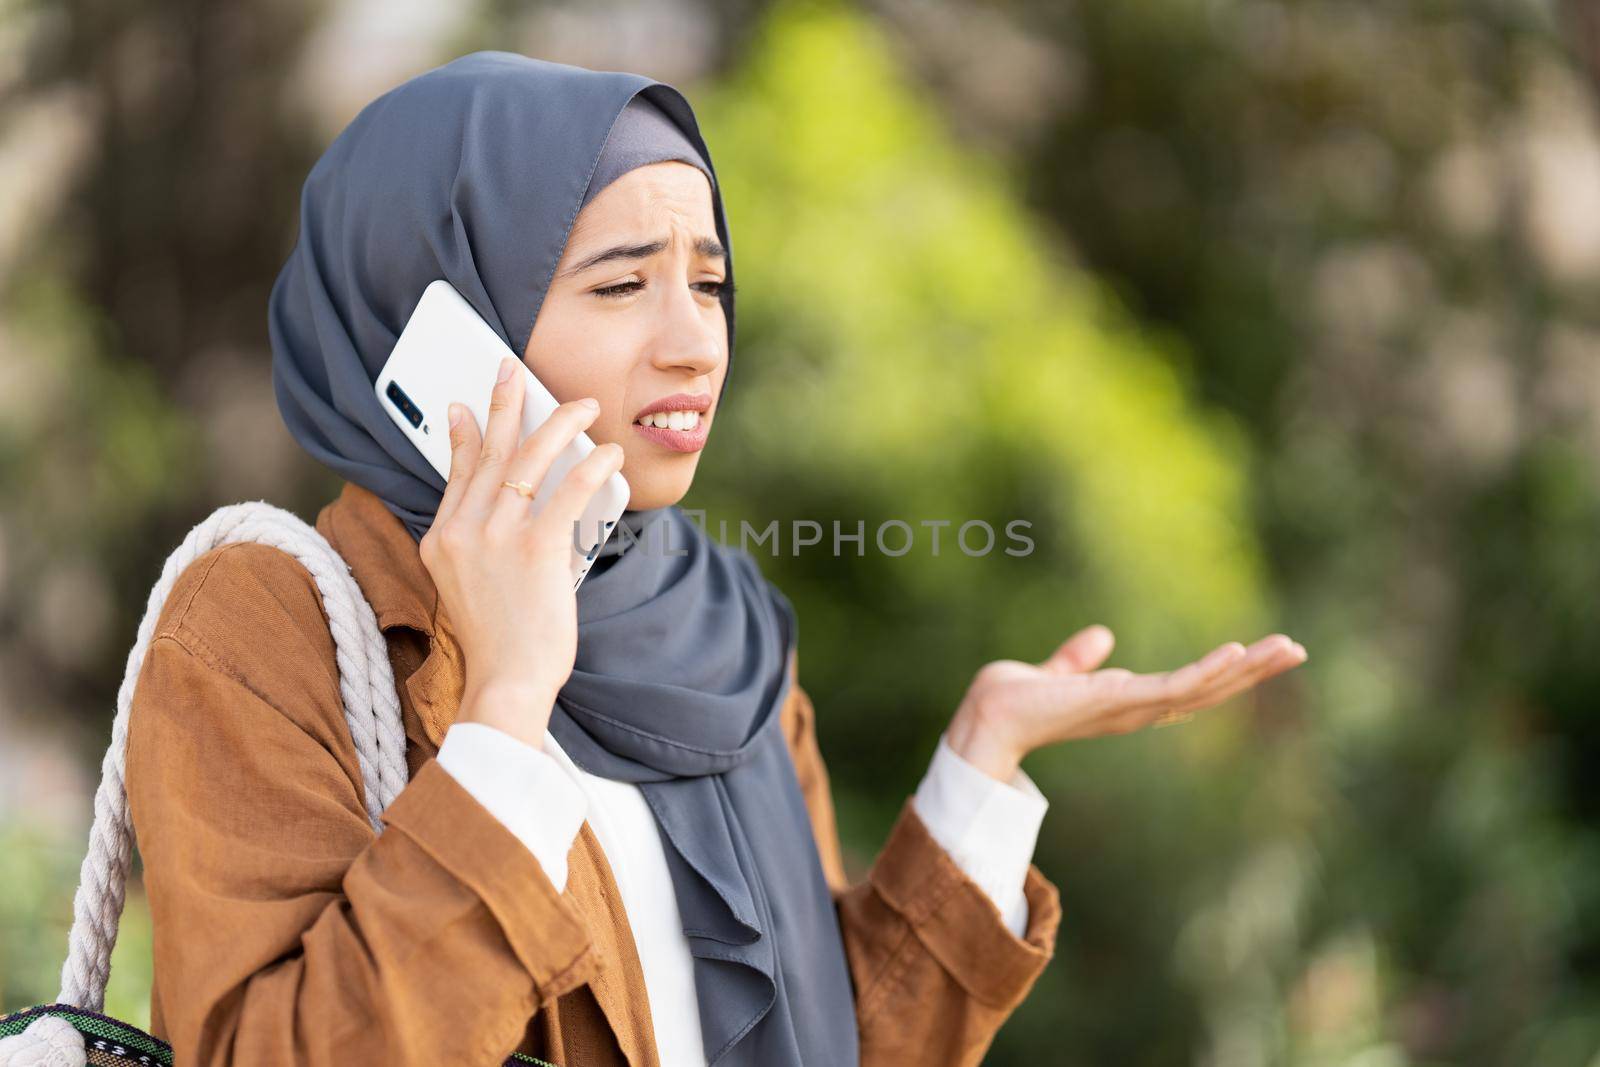 Muslim woman talking to mobile phone and gesturing misunderstanding